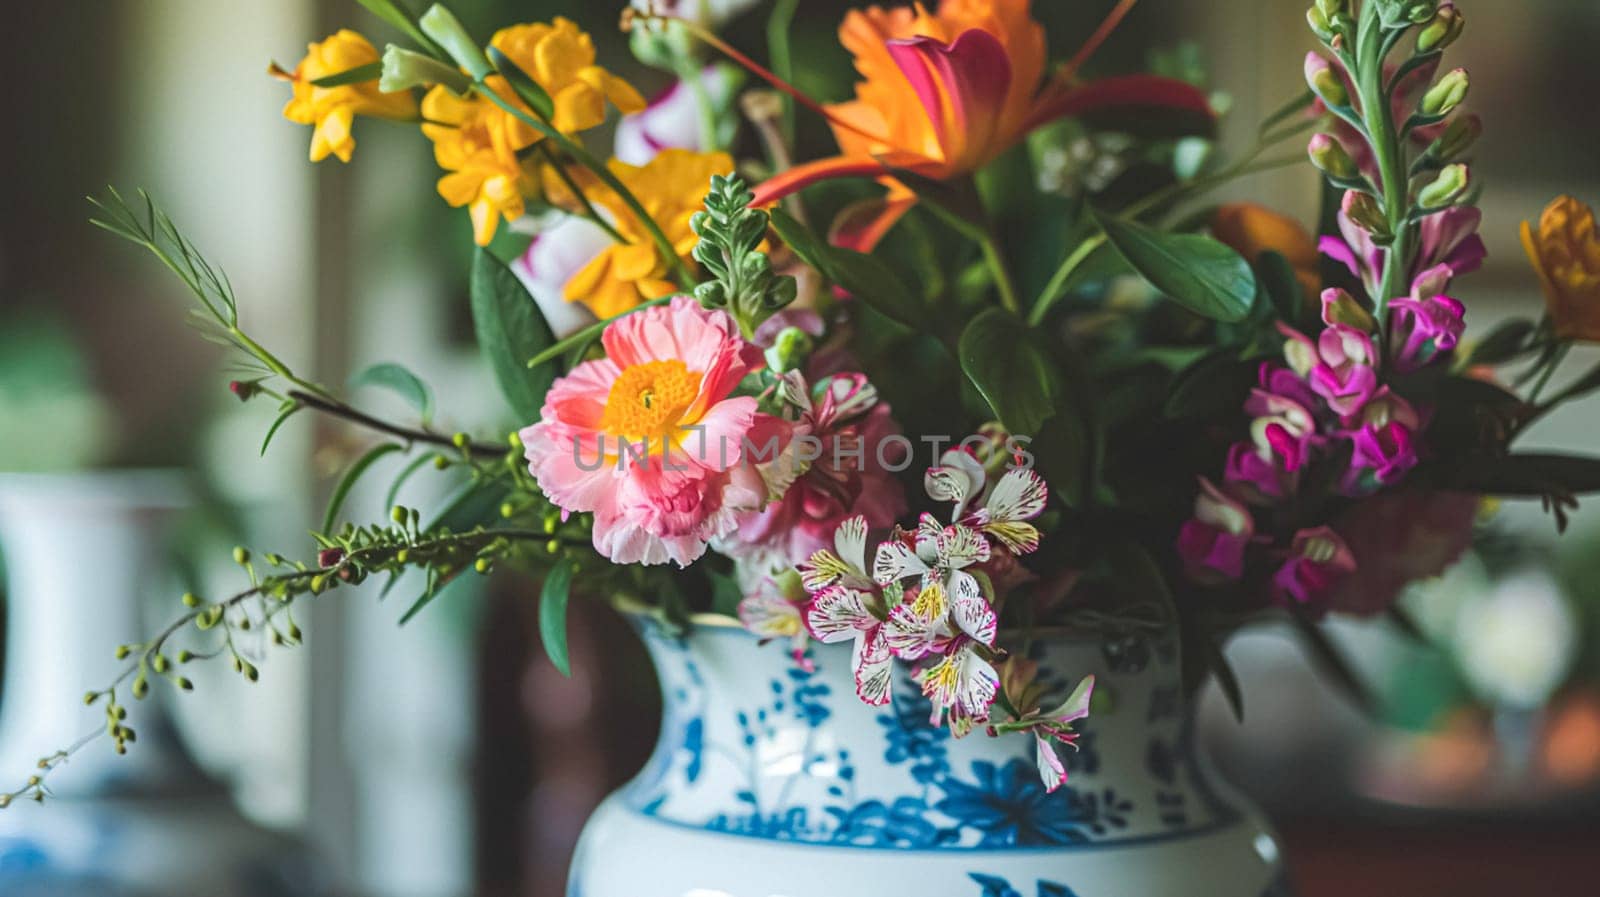 Spring flowers in vintage vase, beautiful floral arrangement, home decor, wedding and florist design by Anneleven